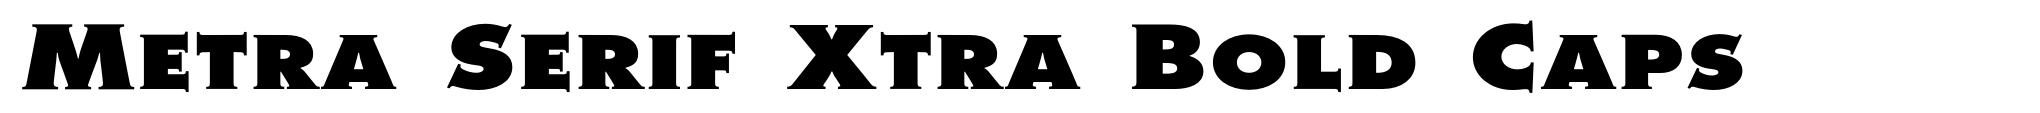 Metra Serif Xtra Bold Caps image